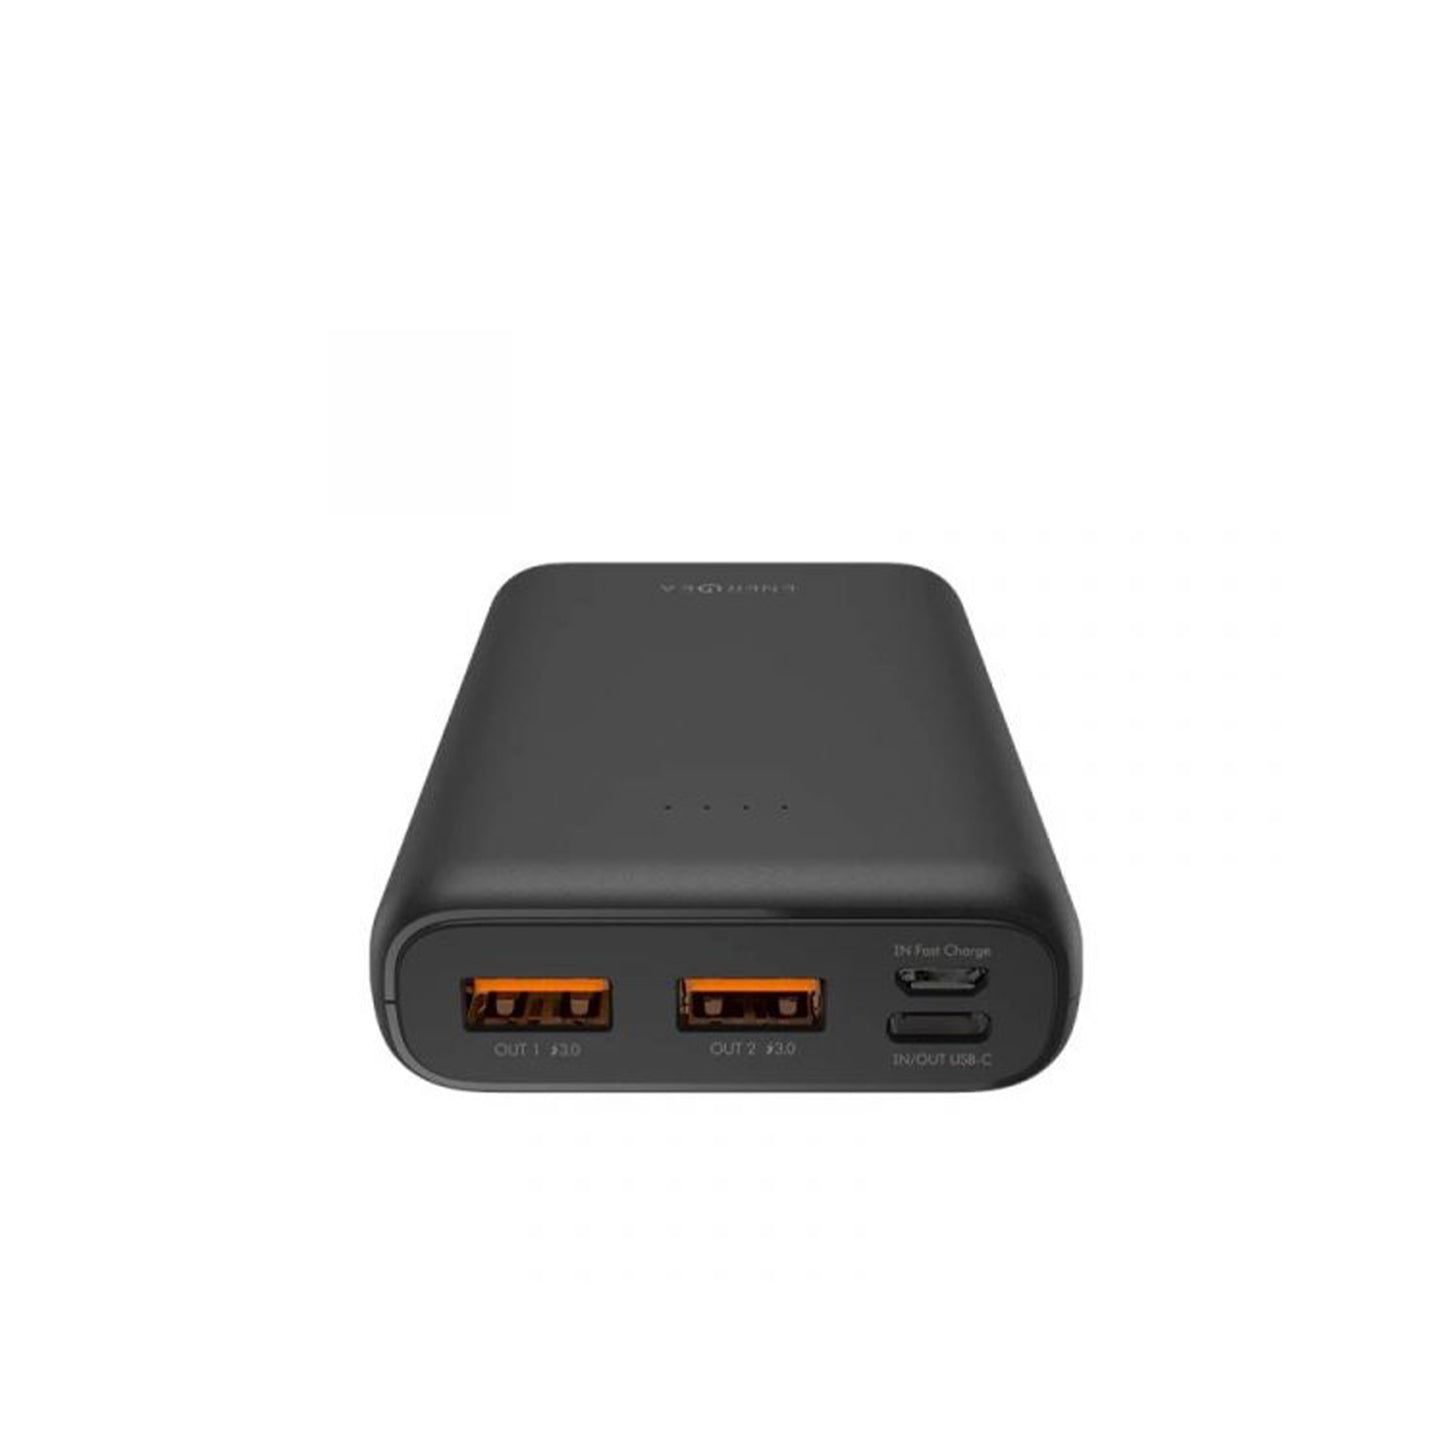 ENERGEA Compac Ultra 20,000mAh USB-C PD Powerbank - Black